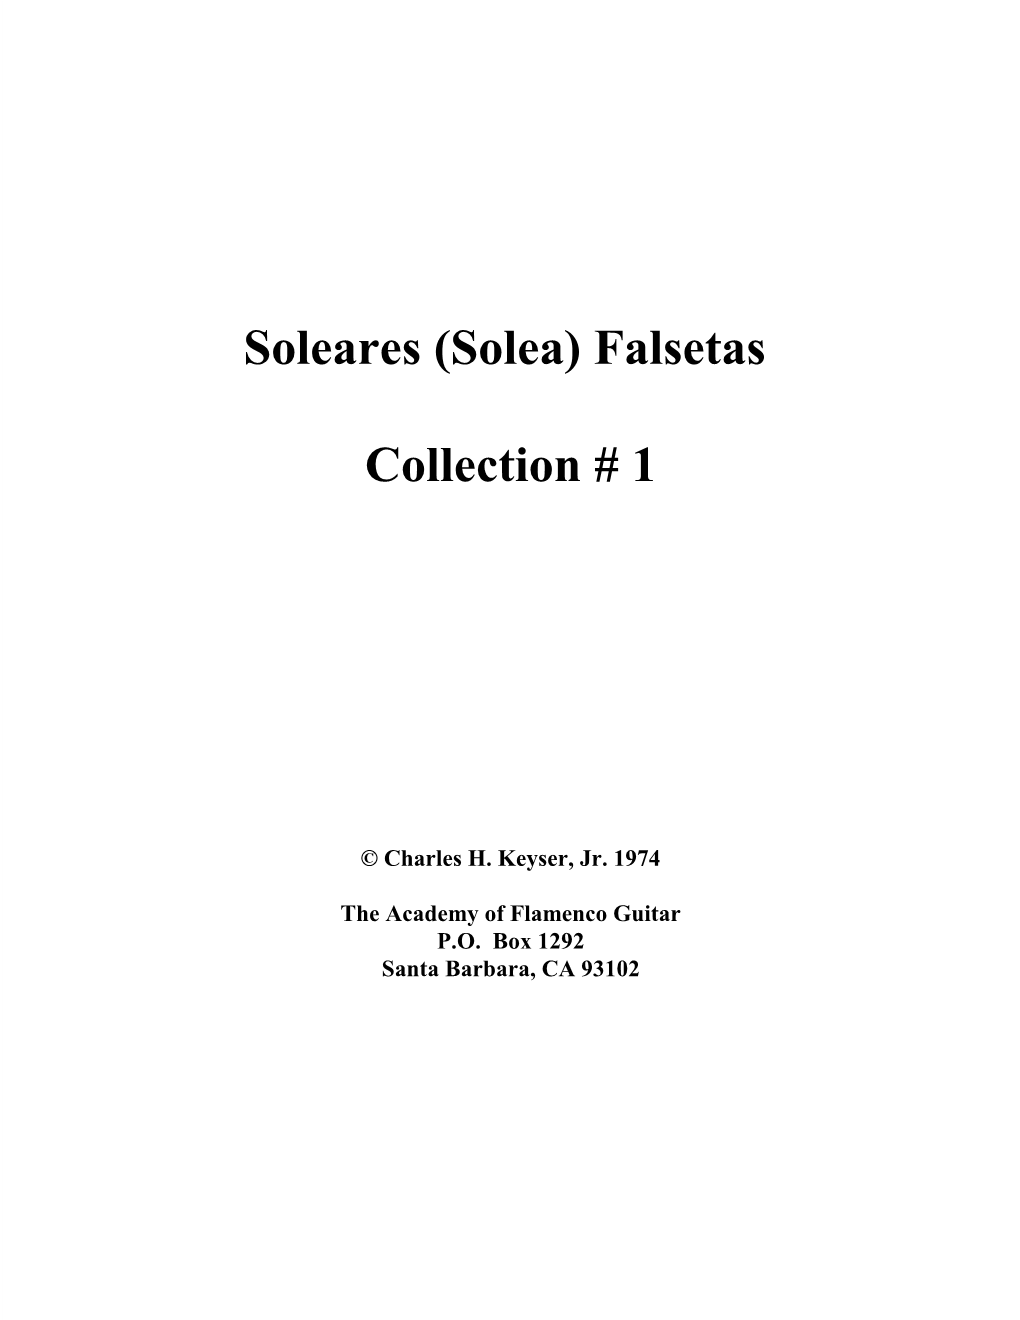 Soleares (Solea) Falsetas Collection